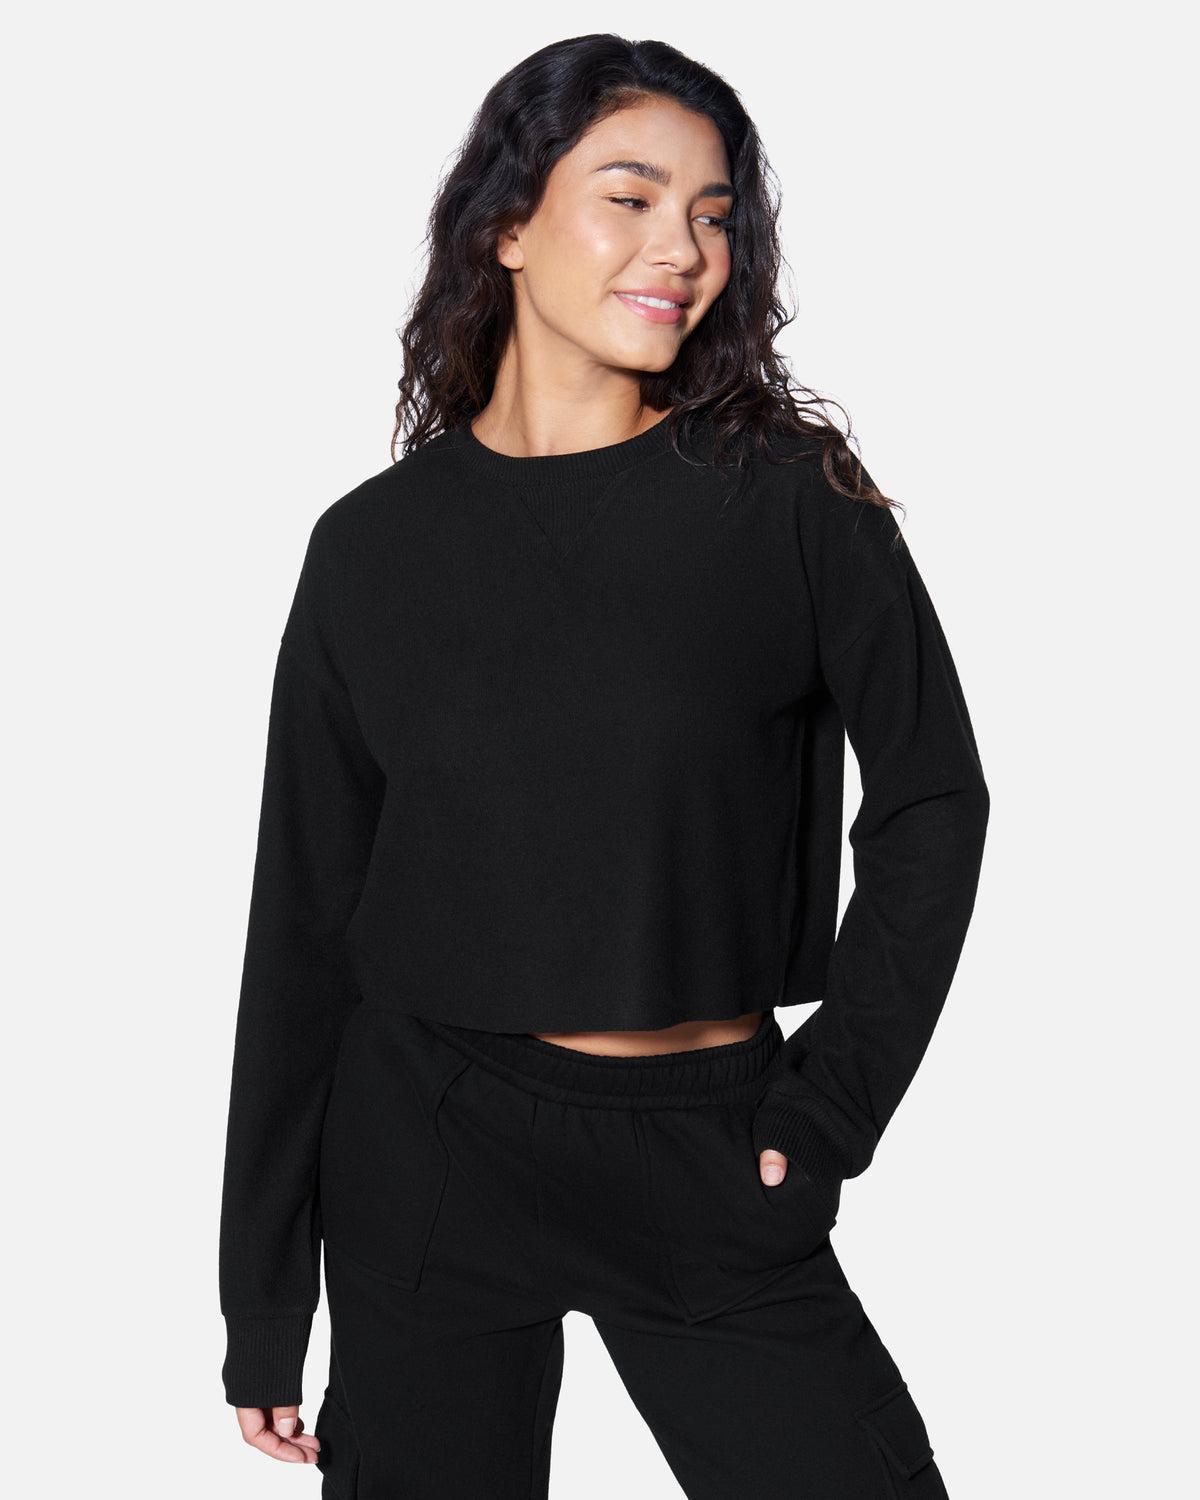 Women's Tops - Shirts, Sweaters | Hurley